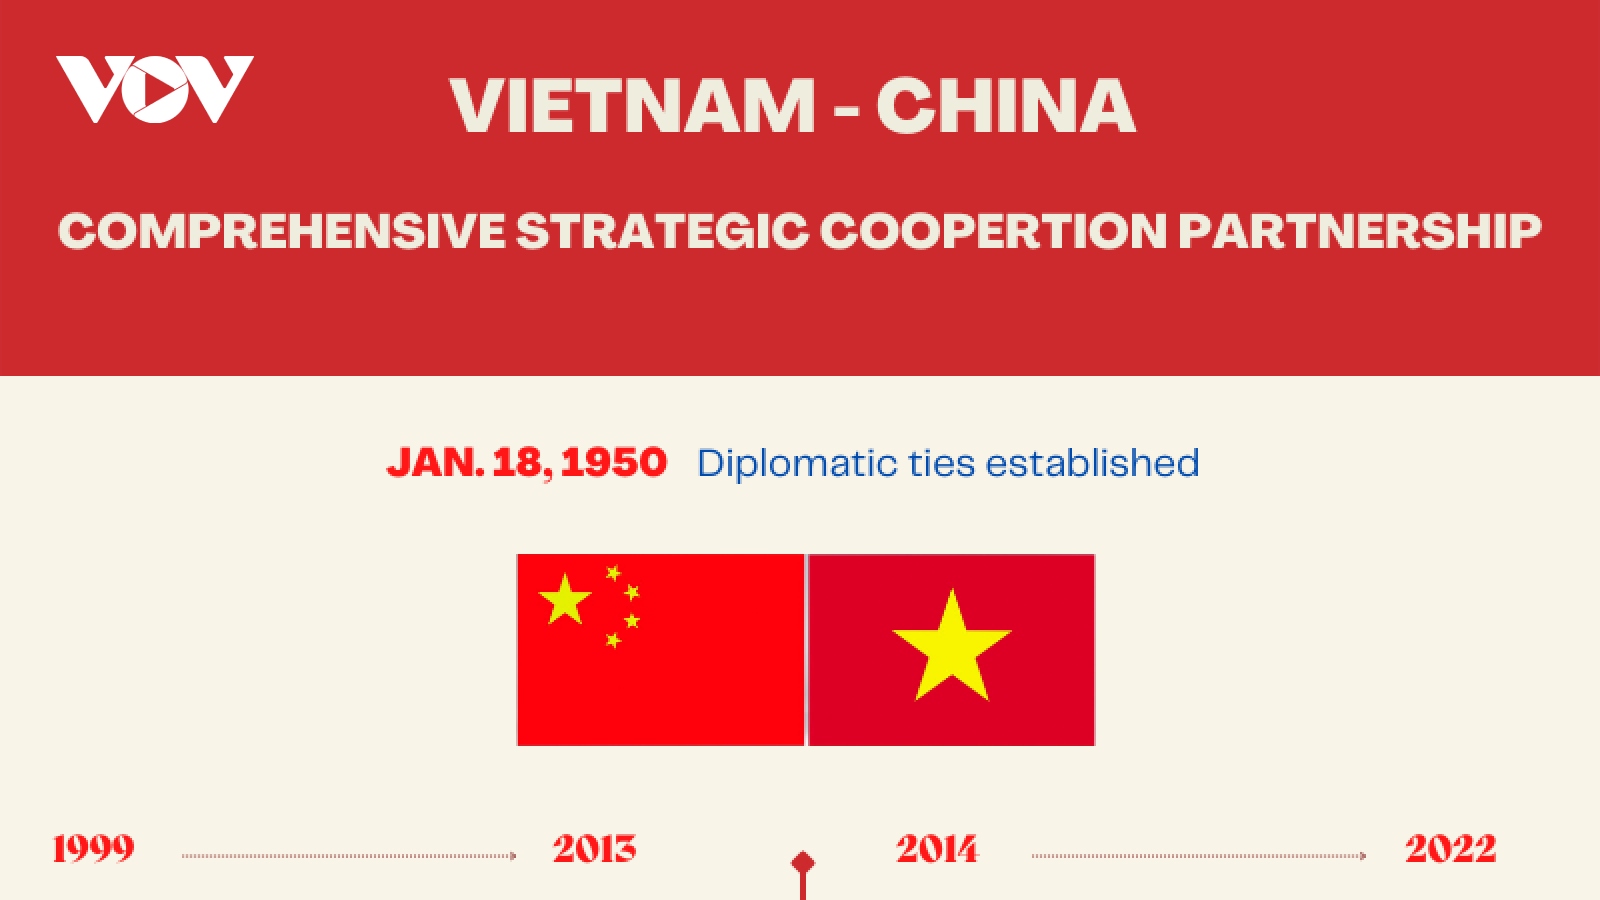 Significant milestones in Vietnam – China relations